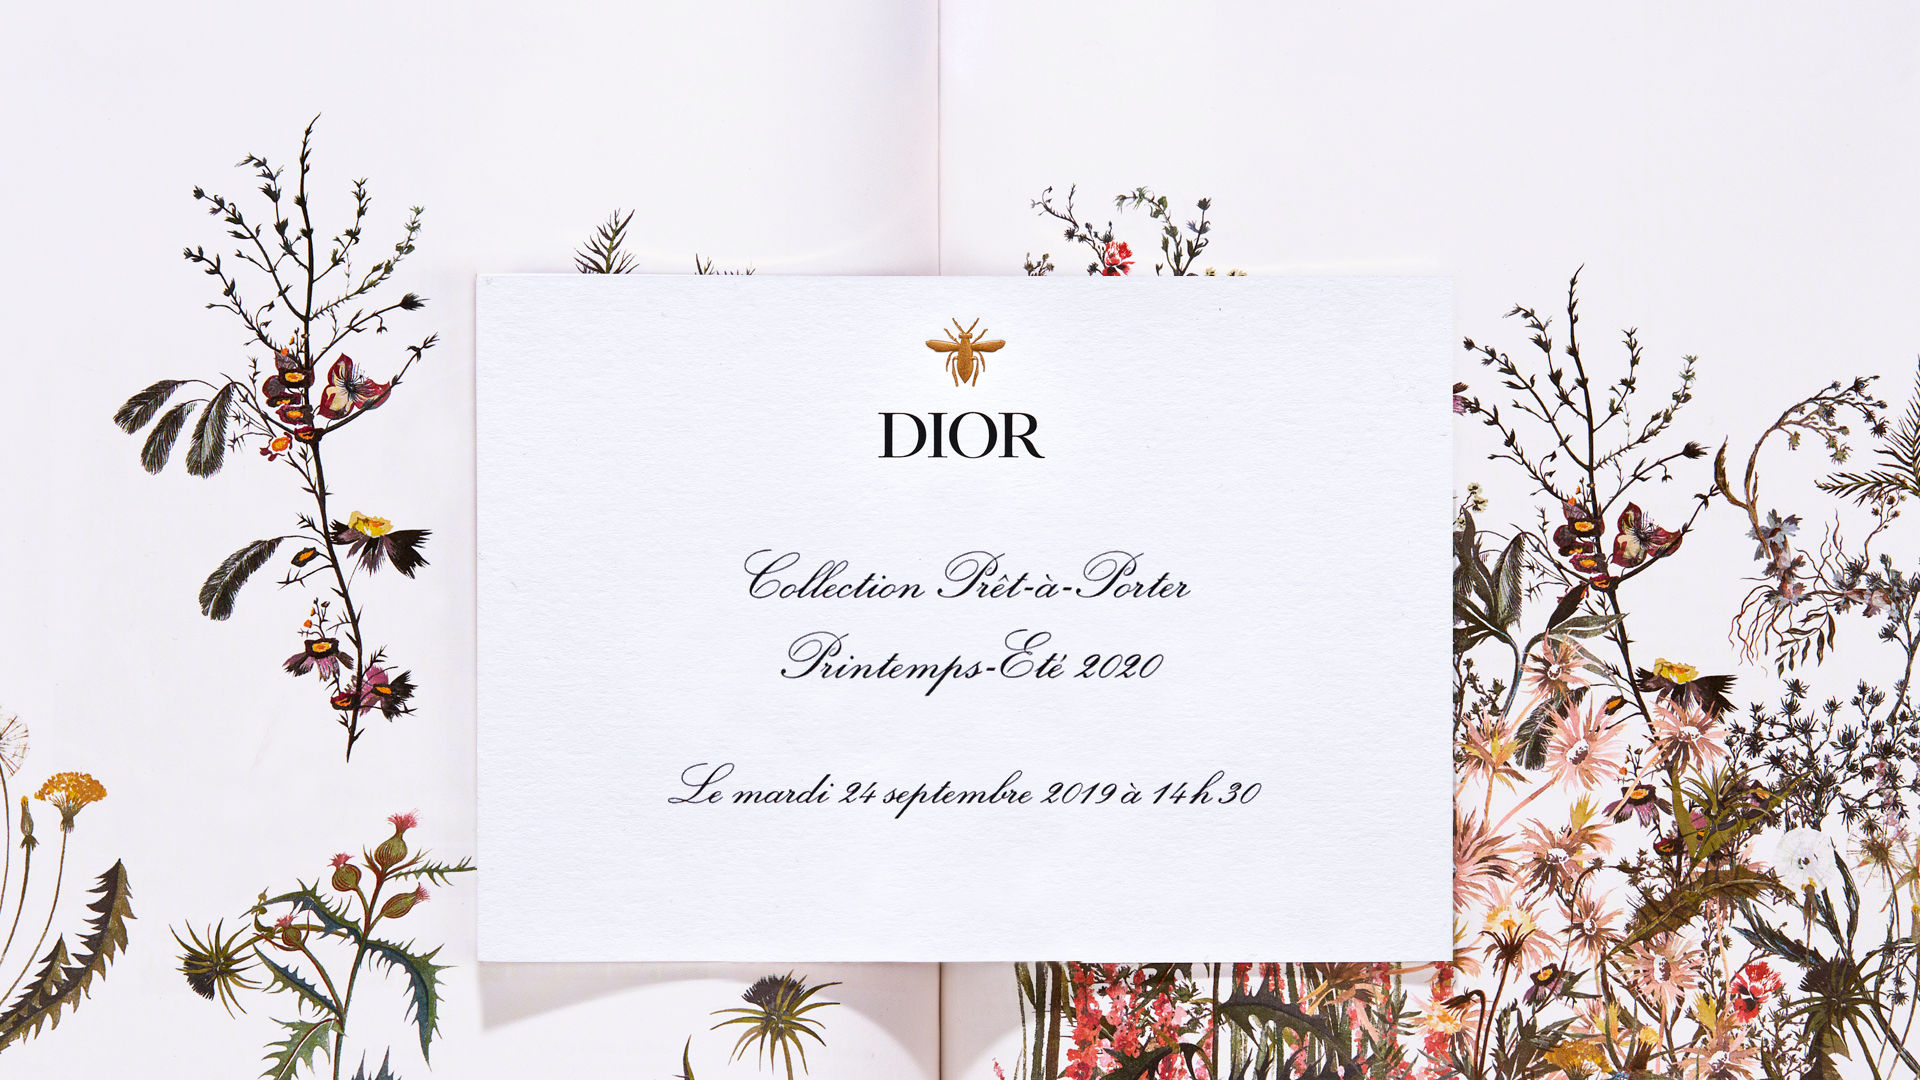 Livestream: Dior Spring Summer 2020 collection